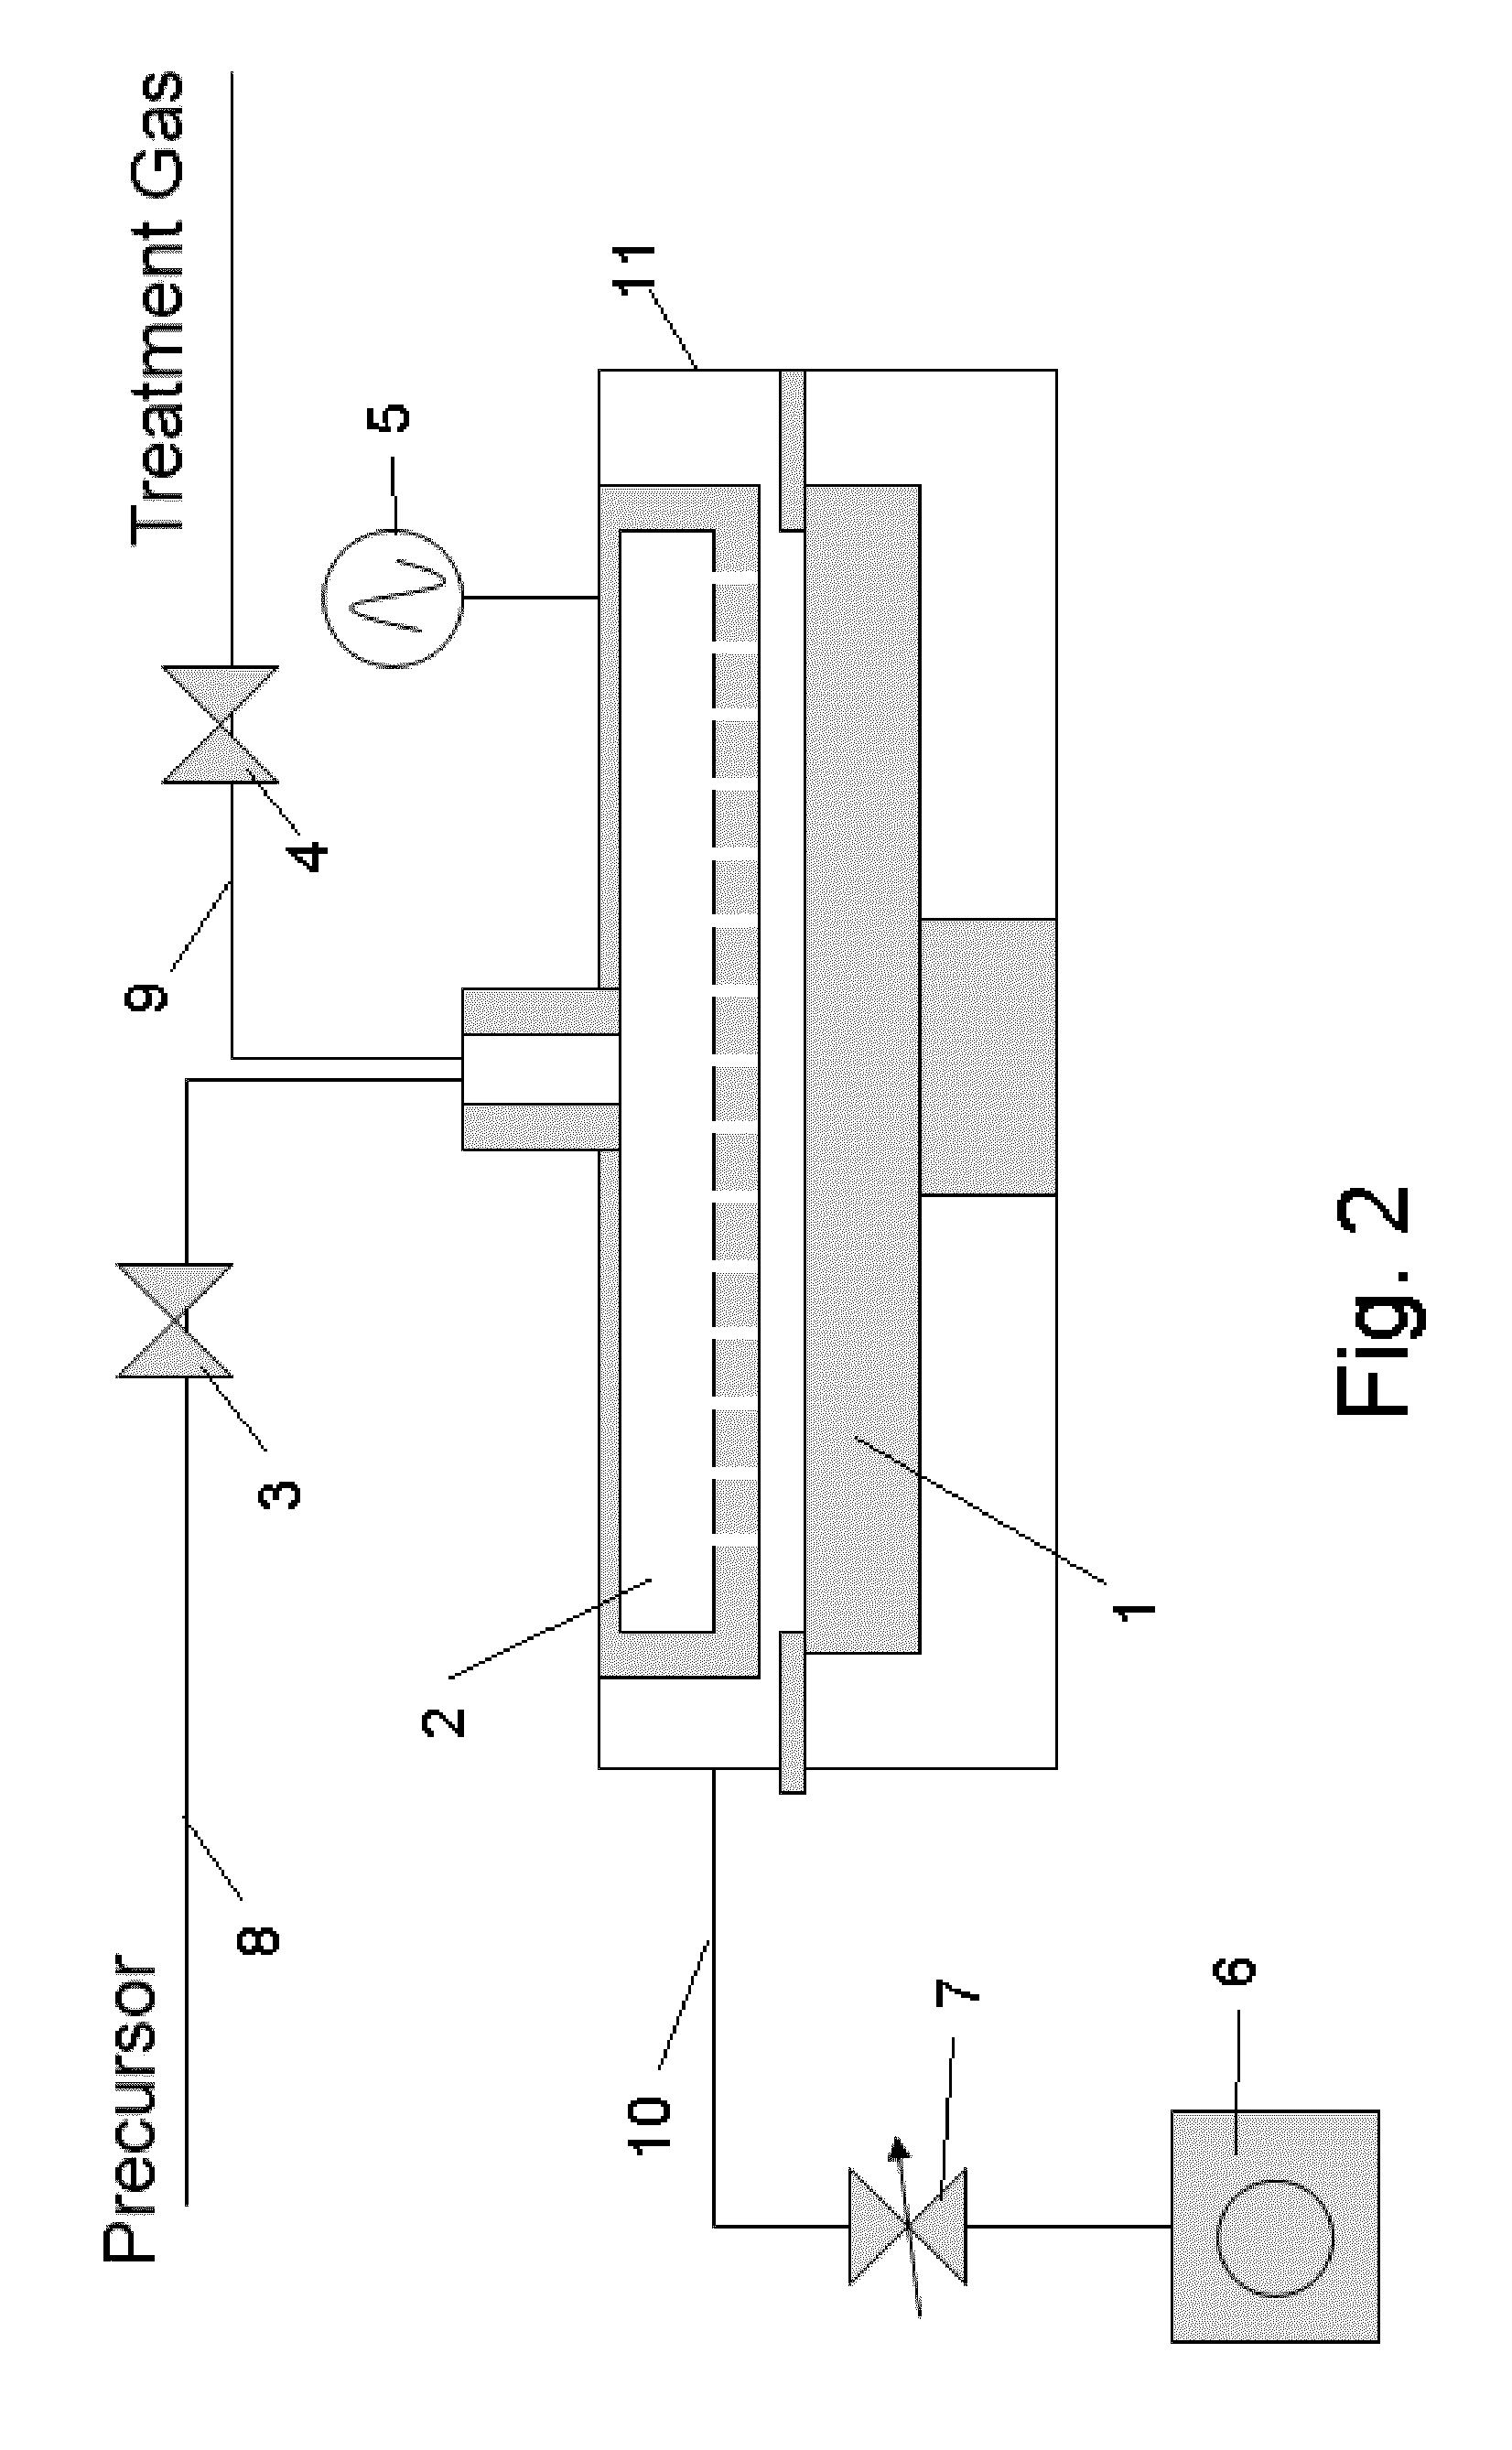 Method of forming insulation film using plasma treatment cycles